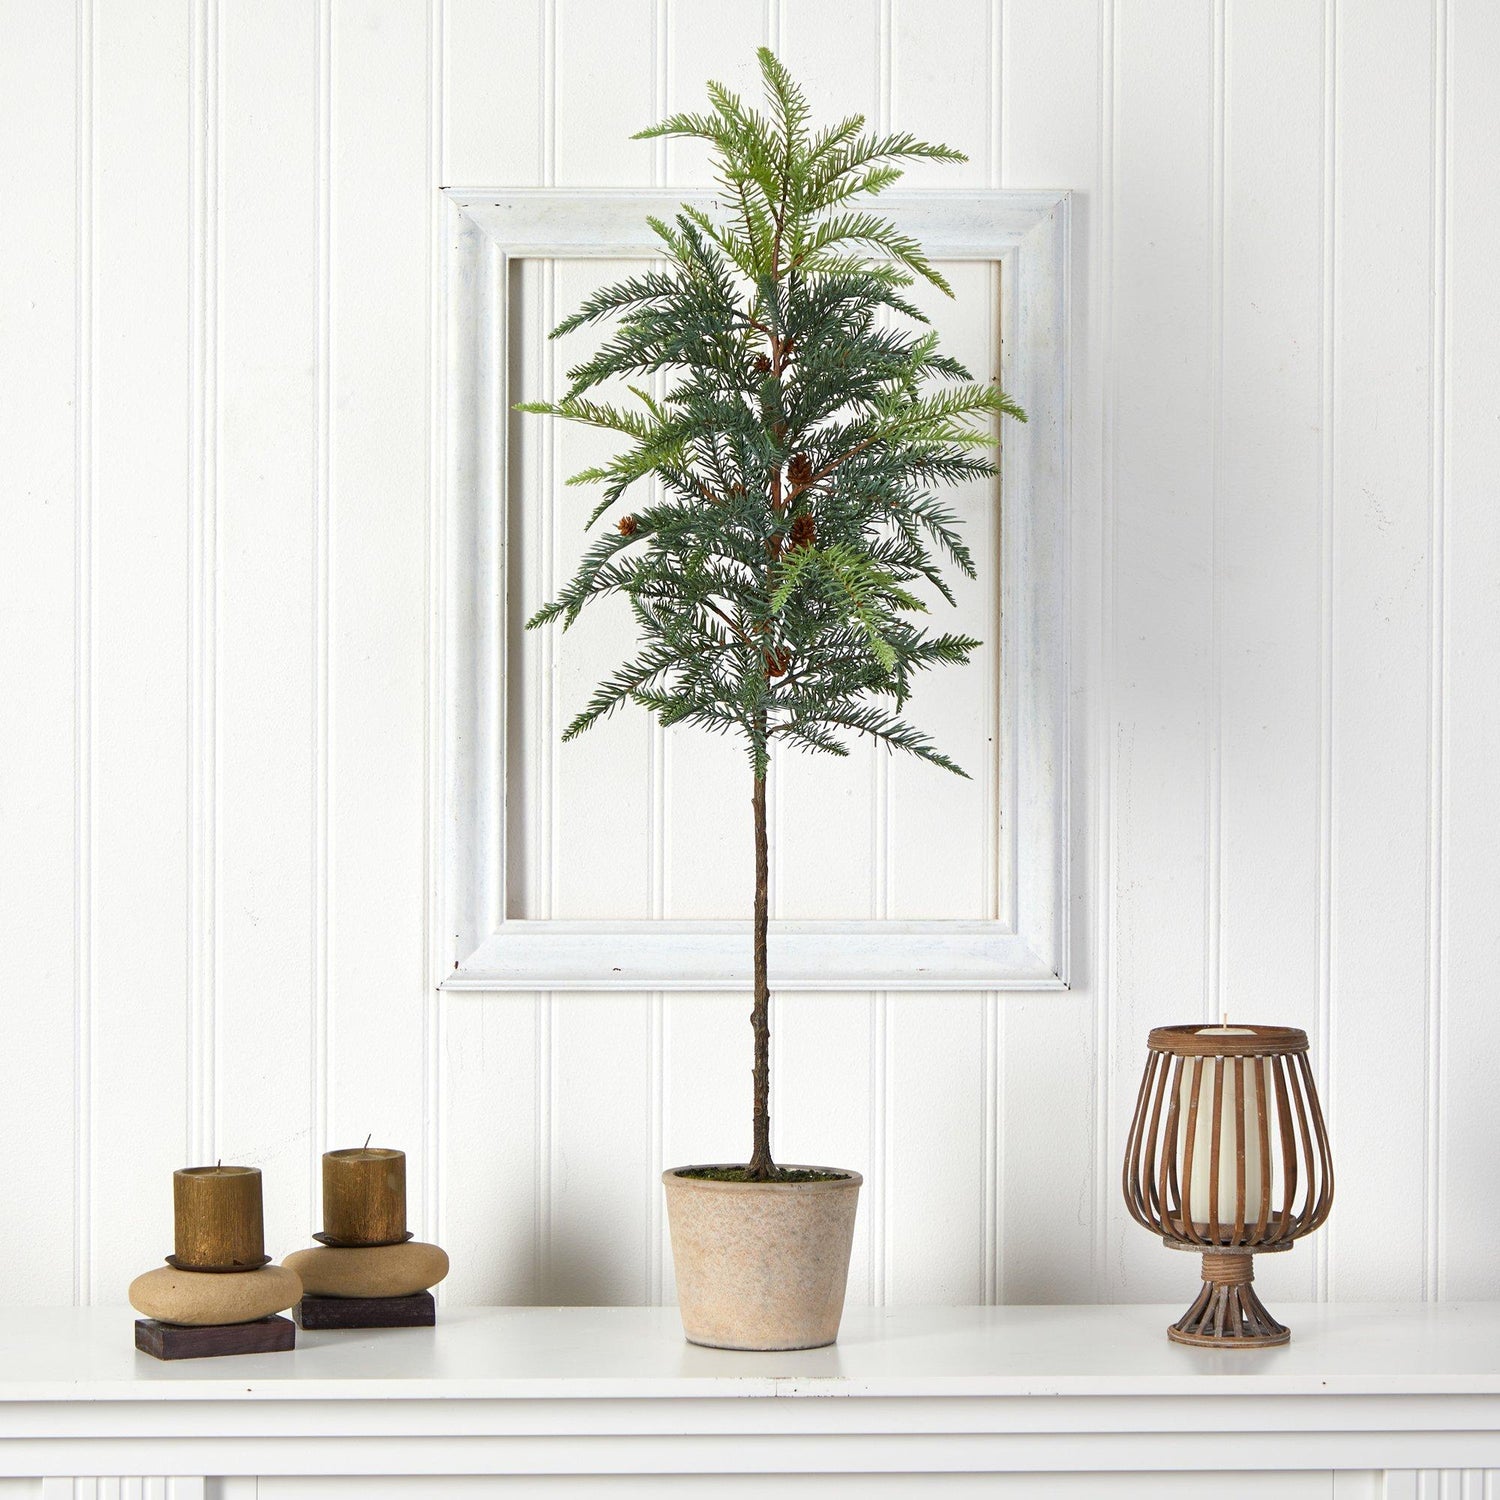 3.5' Winniepeg Artificial Pine Christmas Tree in Decorative Planter